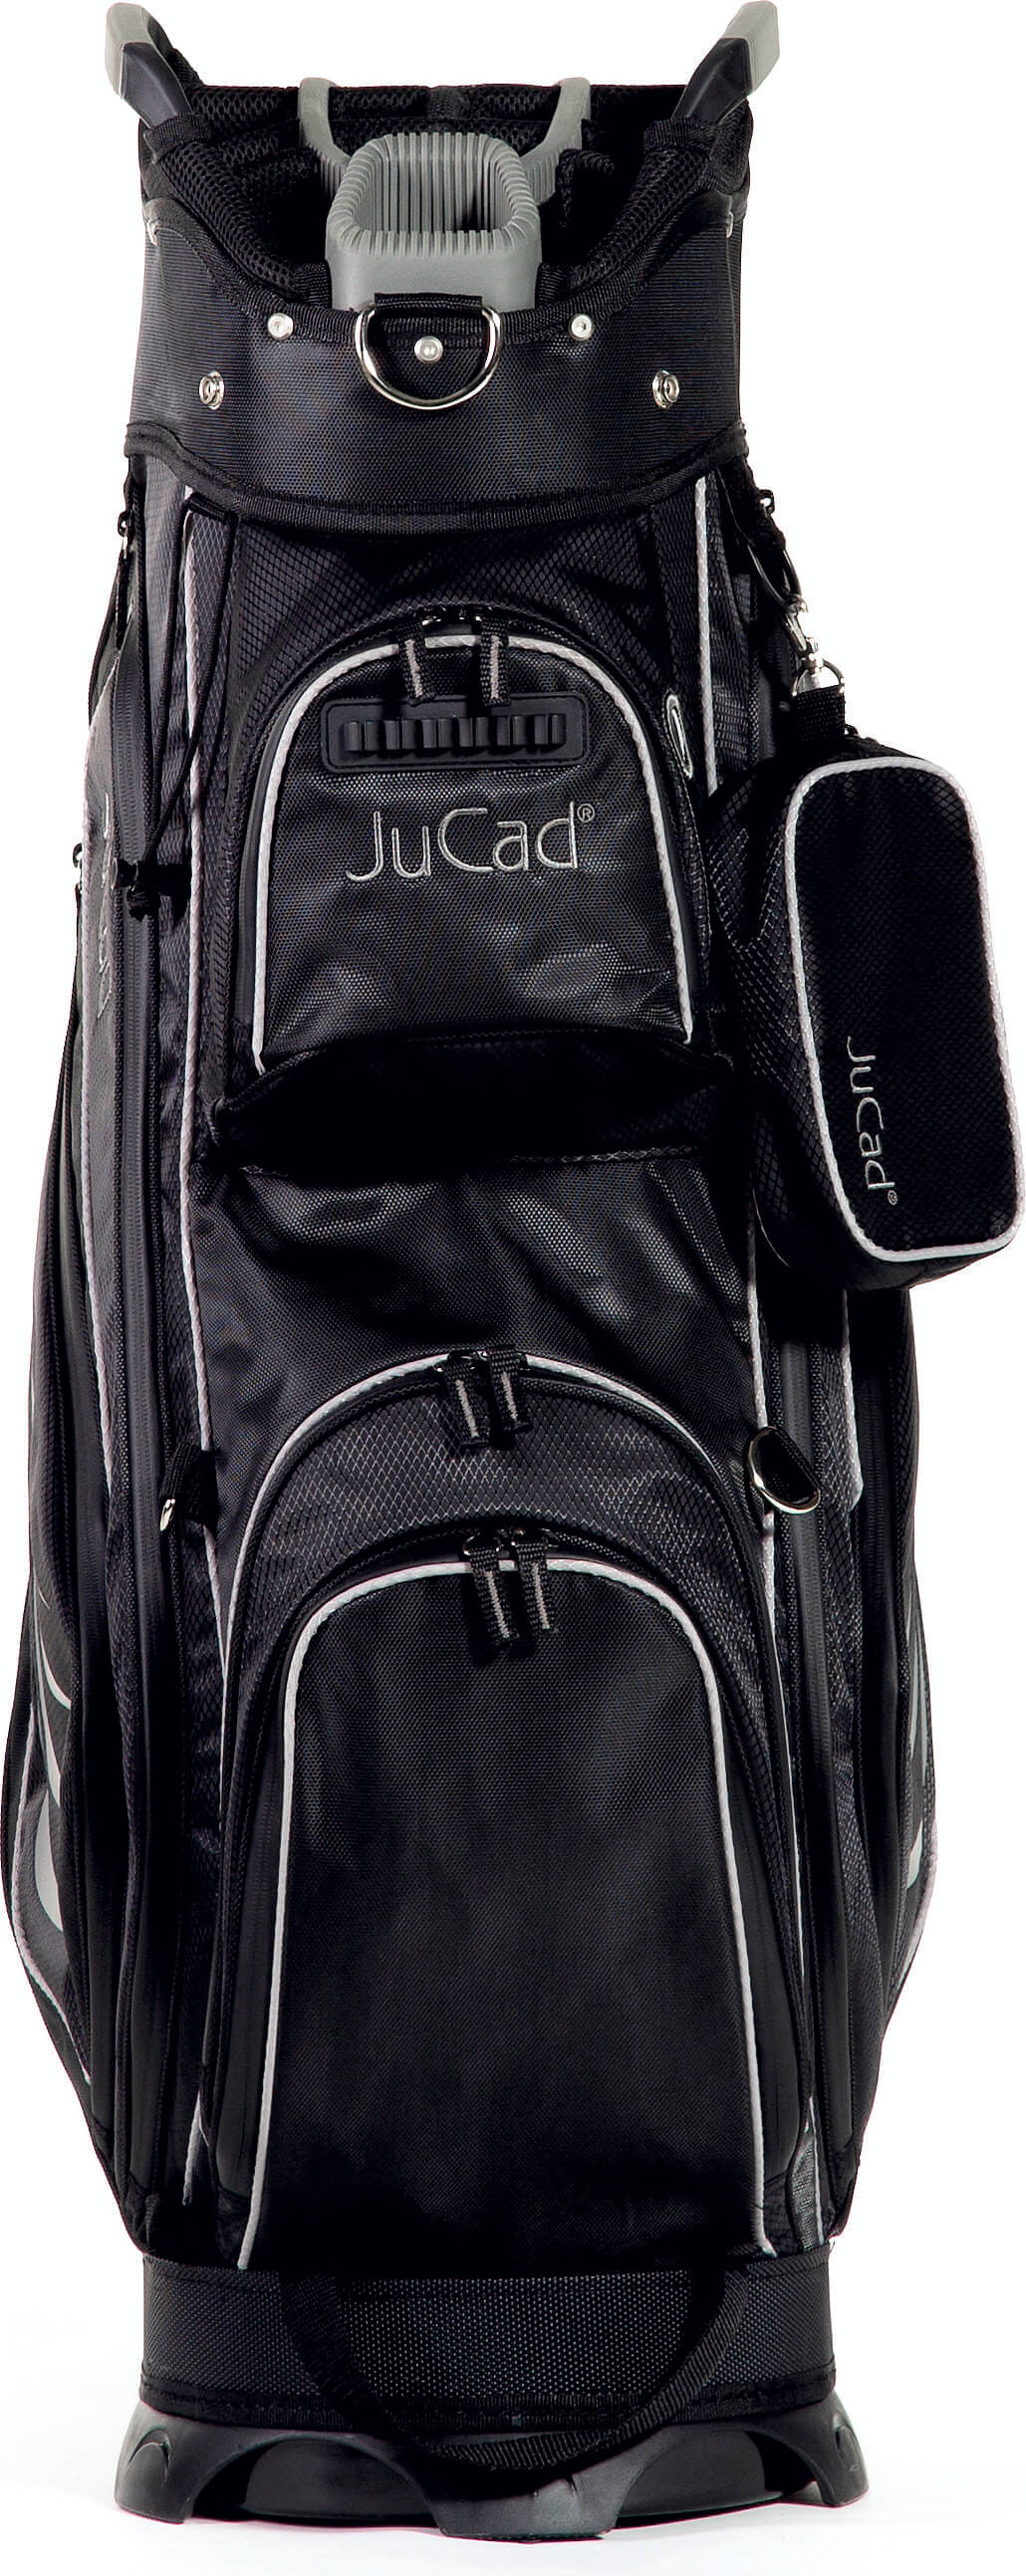 JuCad Captain Dry Cartbag